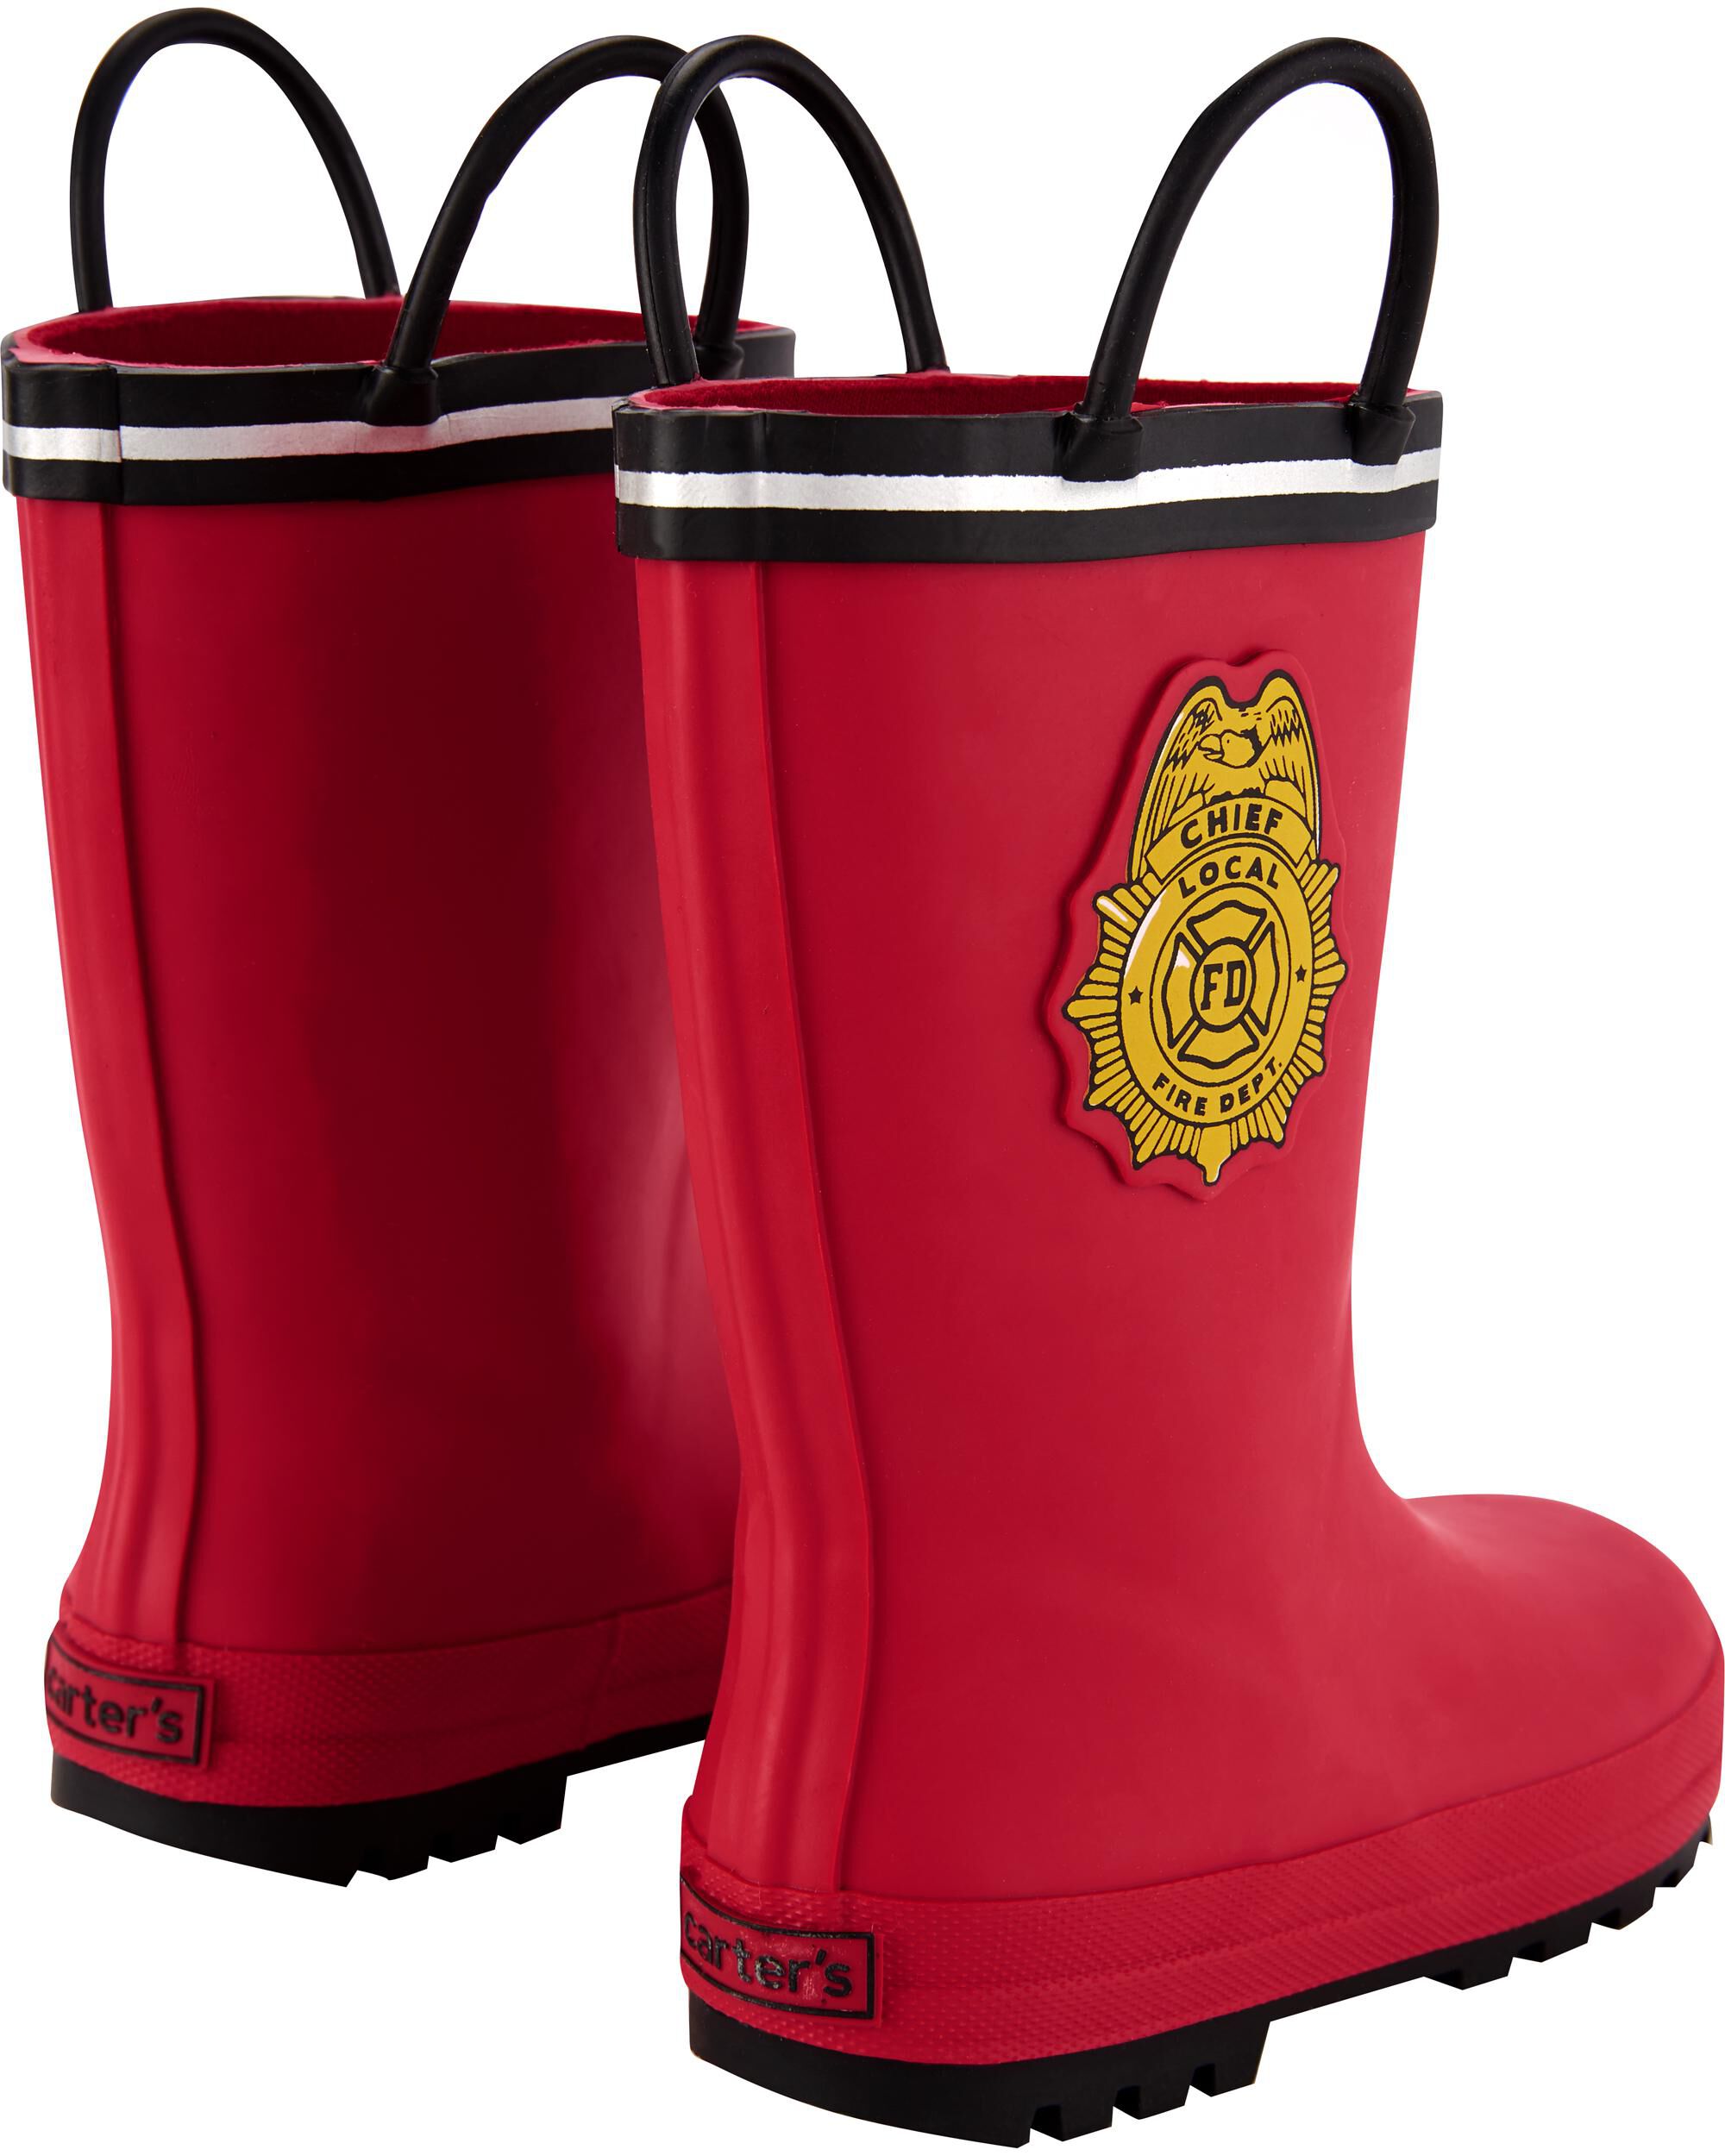 carters rain boots canada